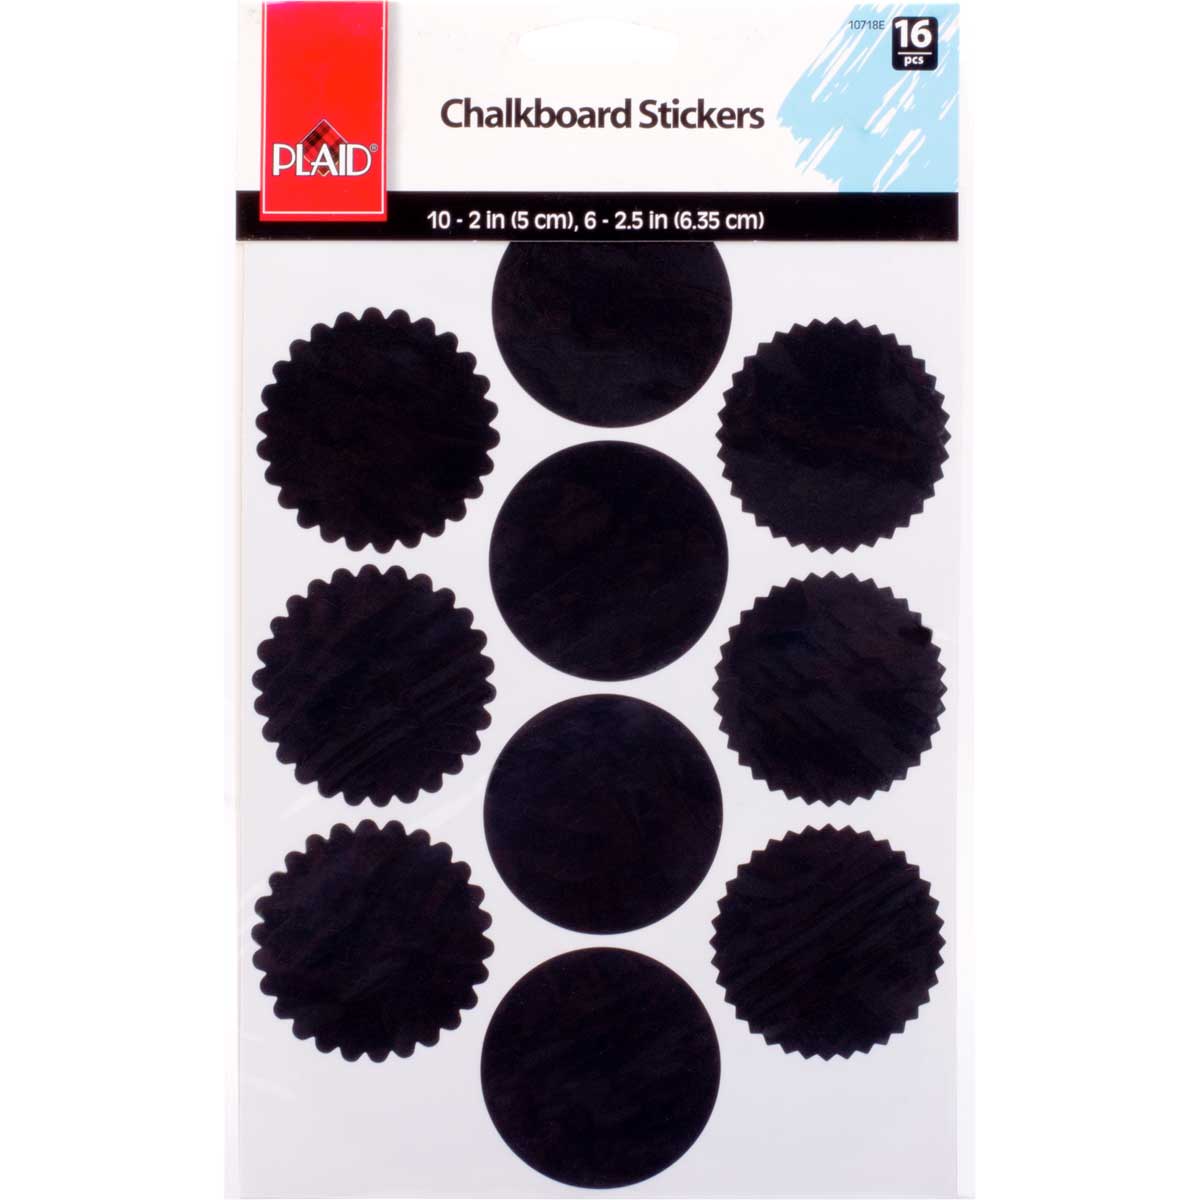 Plaid ® Chalkboard Stickers, 16 pcs. - 10718E